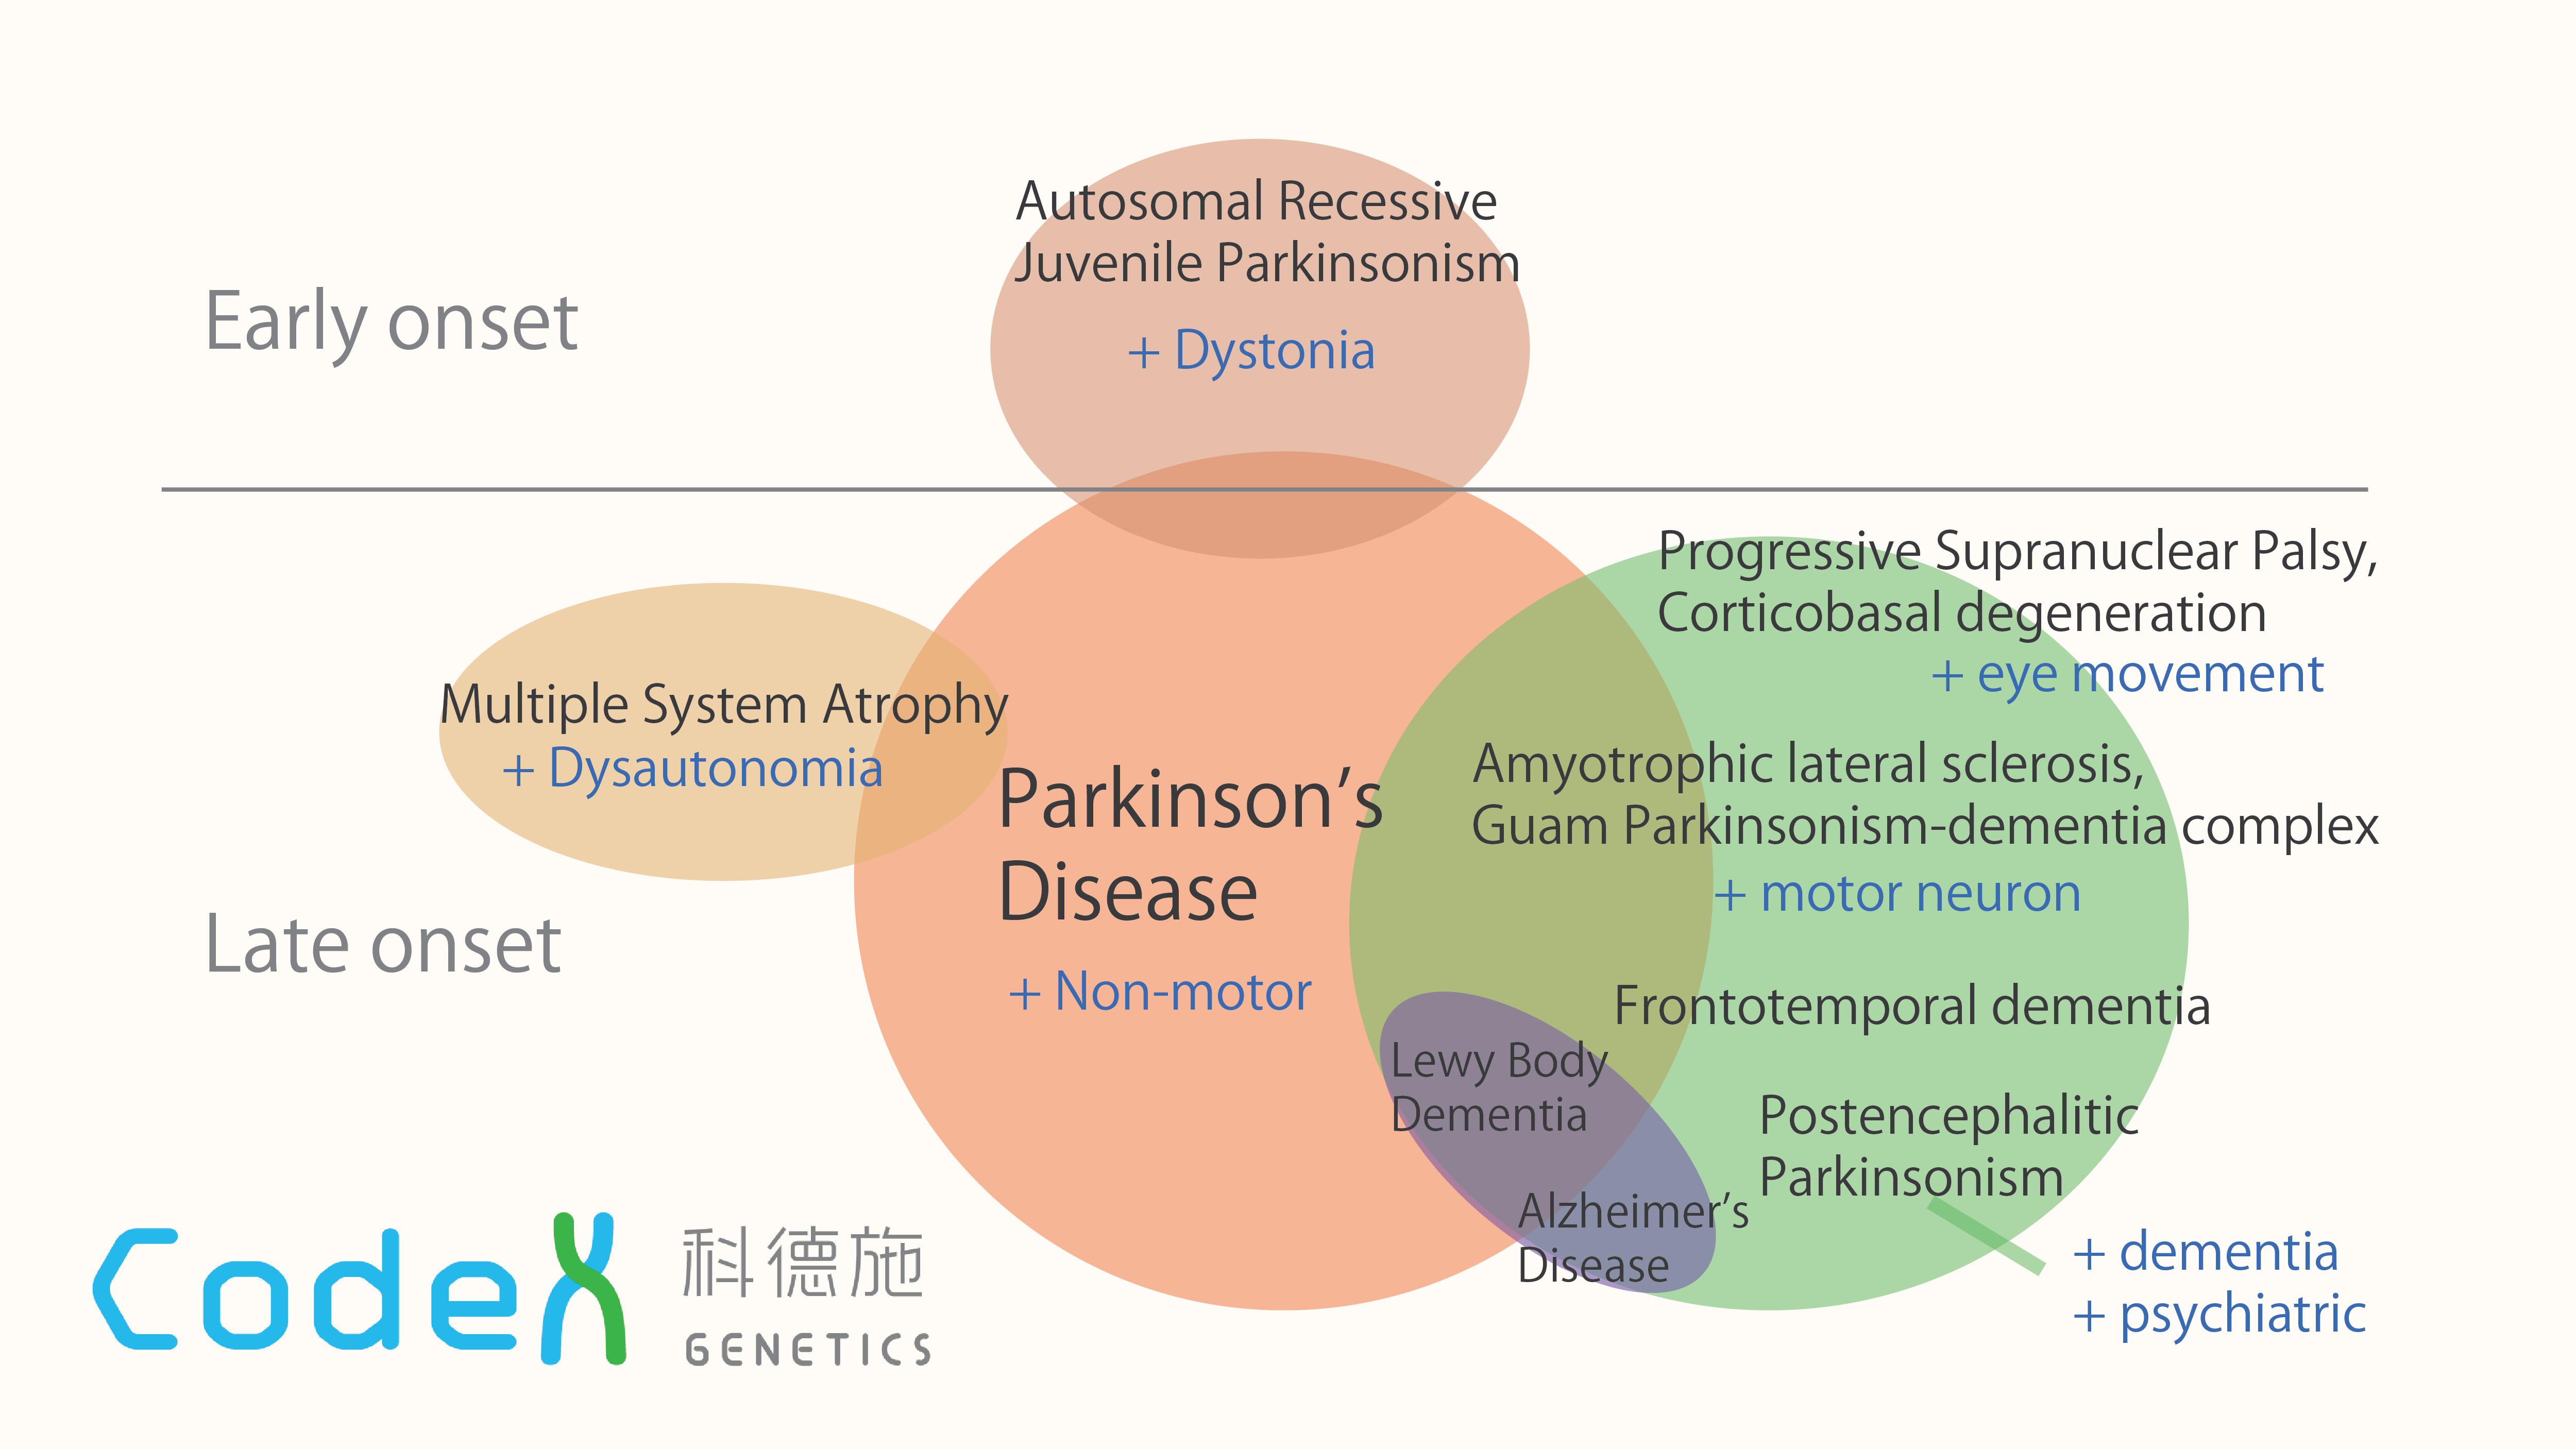 Symptom Overlap Between Classic Parkinson's Disease And Atypical Parkinsonism